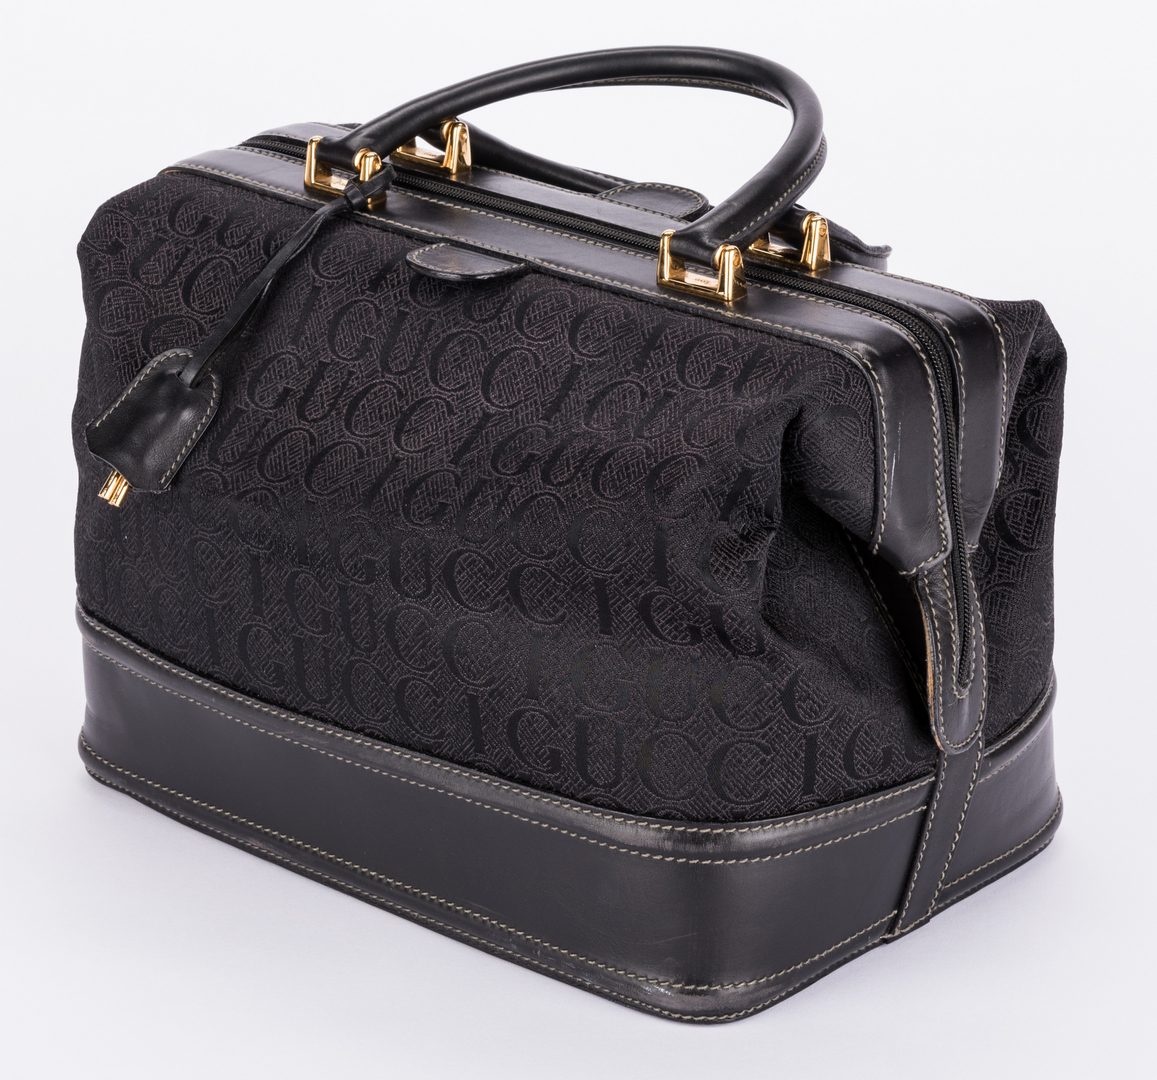 Sold at Auction: Vintage Louis Vuitton Doctor Bag, 10h x 16w x 7